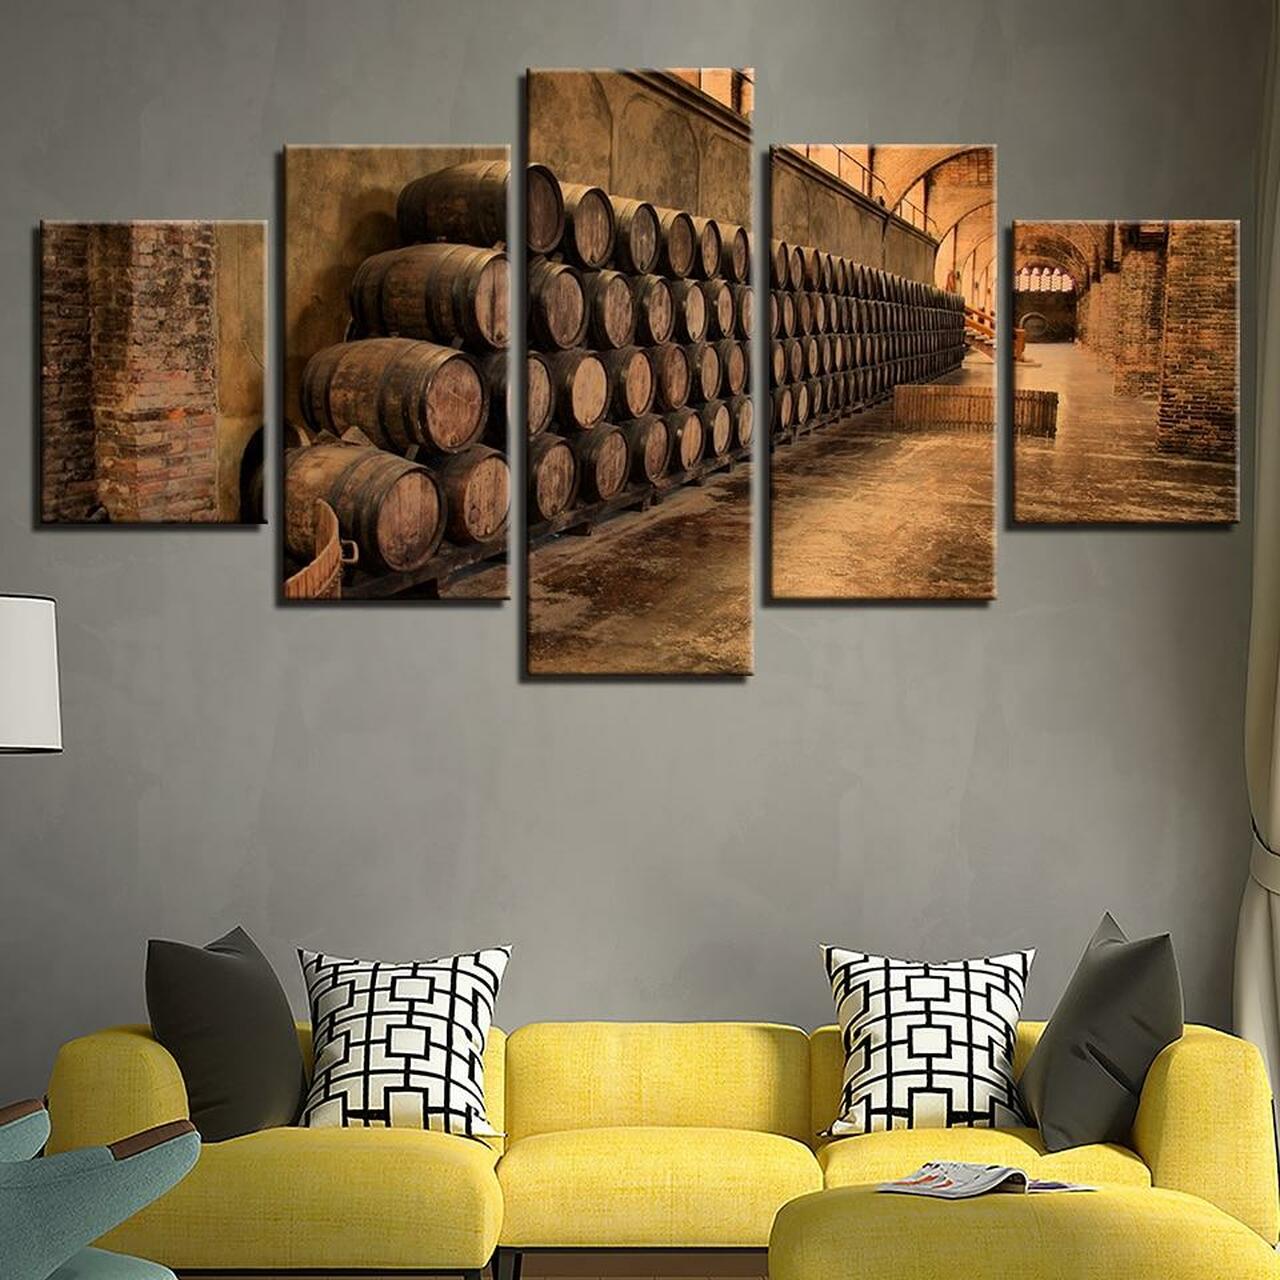 Barrels Of Wine 5 Piece Canvas Art Wall Decor